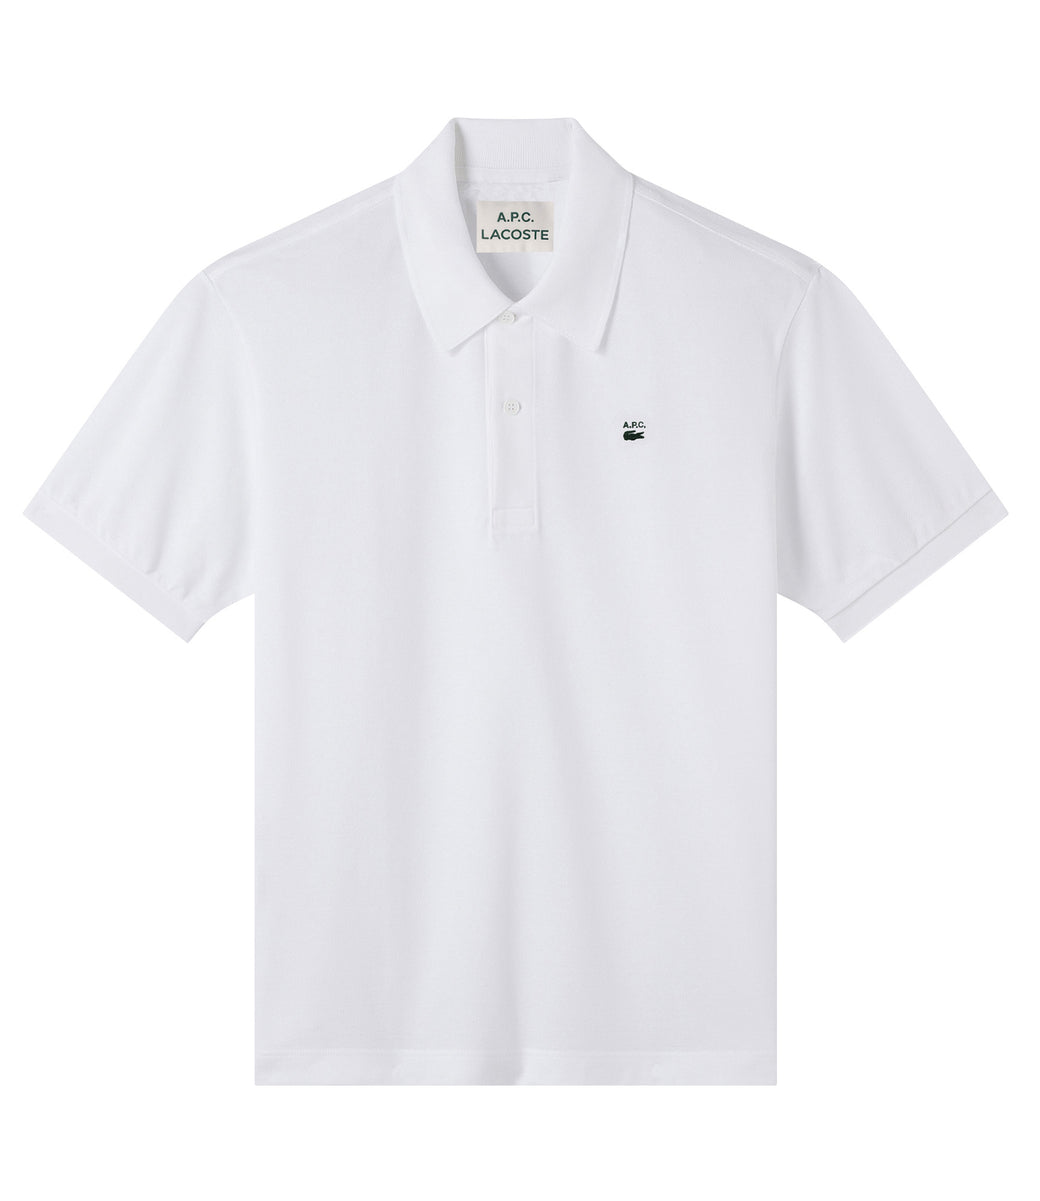 A.P.C. x Lacoste Polo Shirt White - SS22